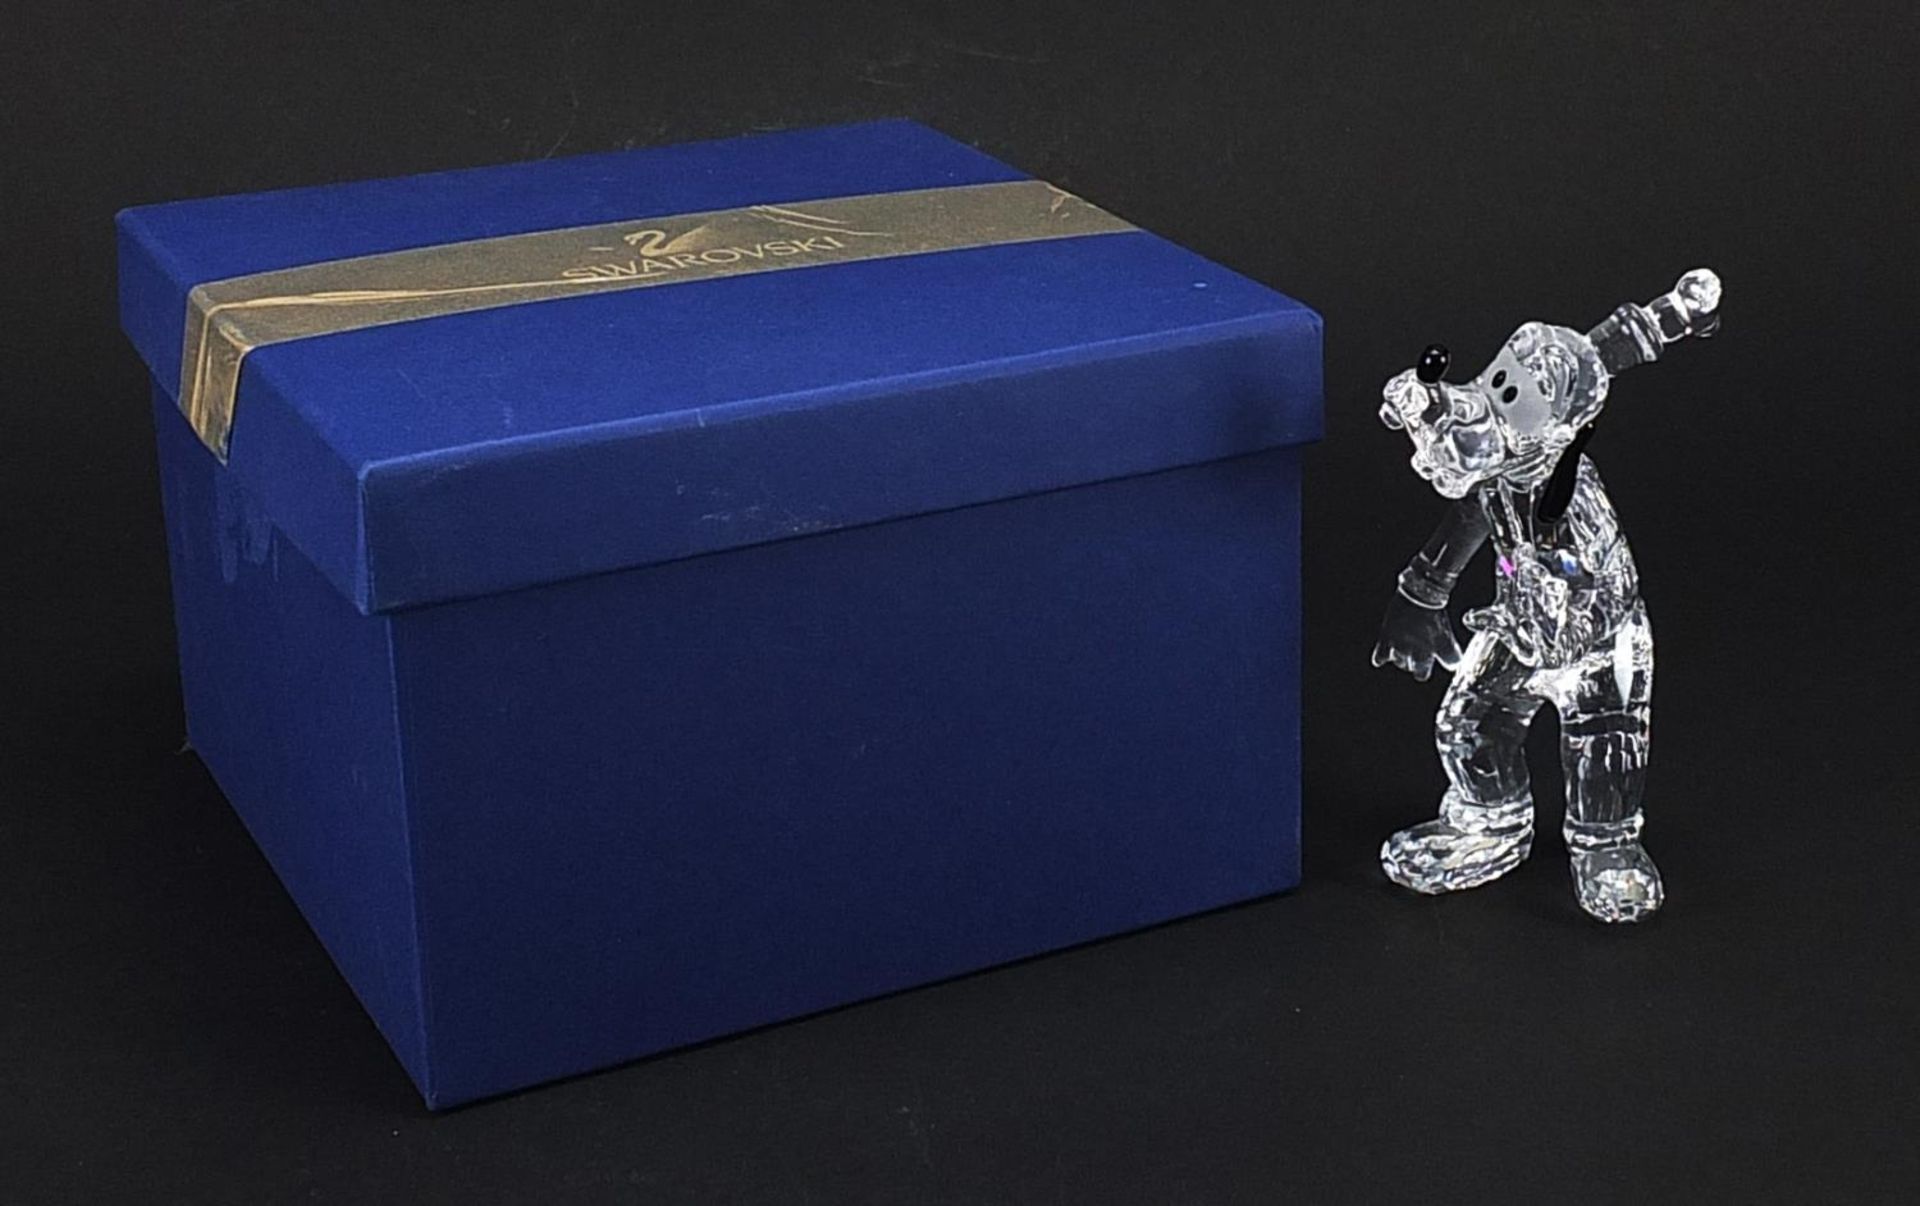 Swarovski Crystal Goofy Disney figure with box, 15cm high